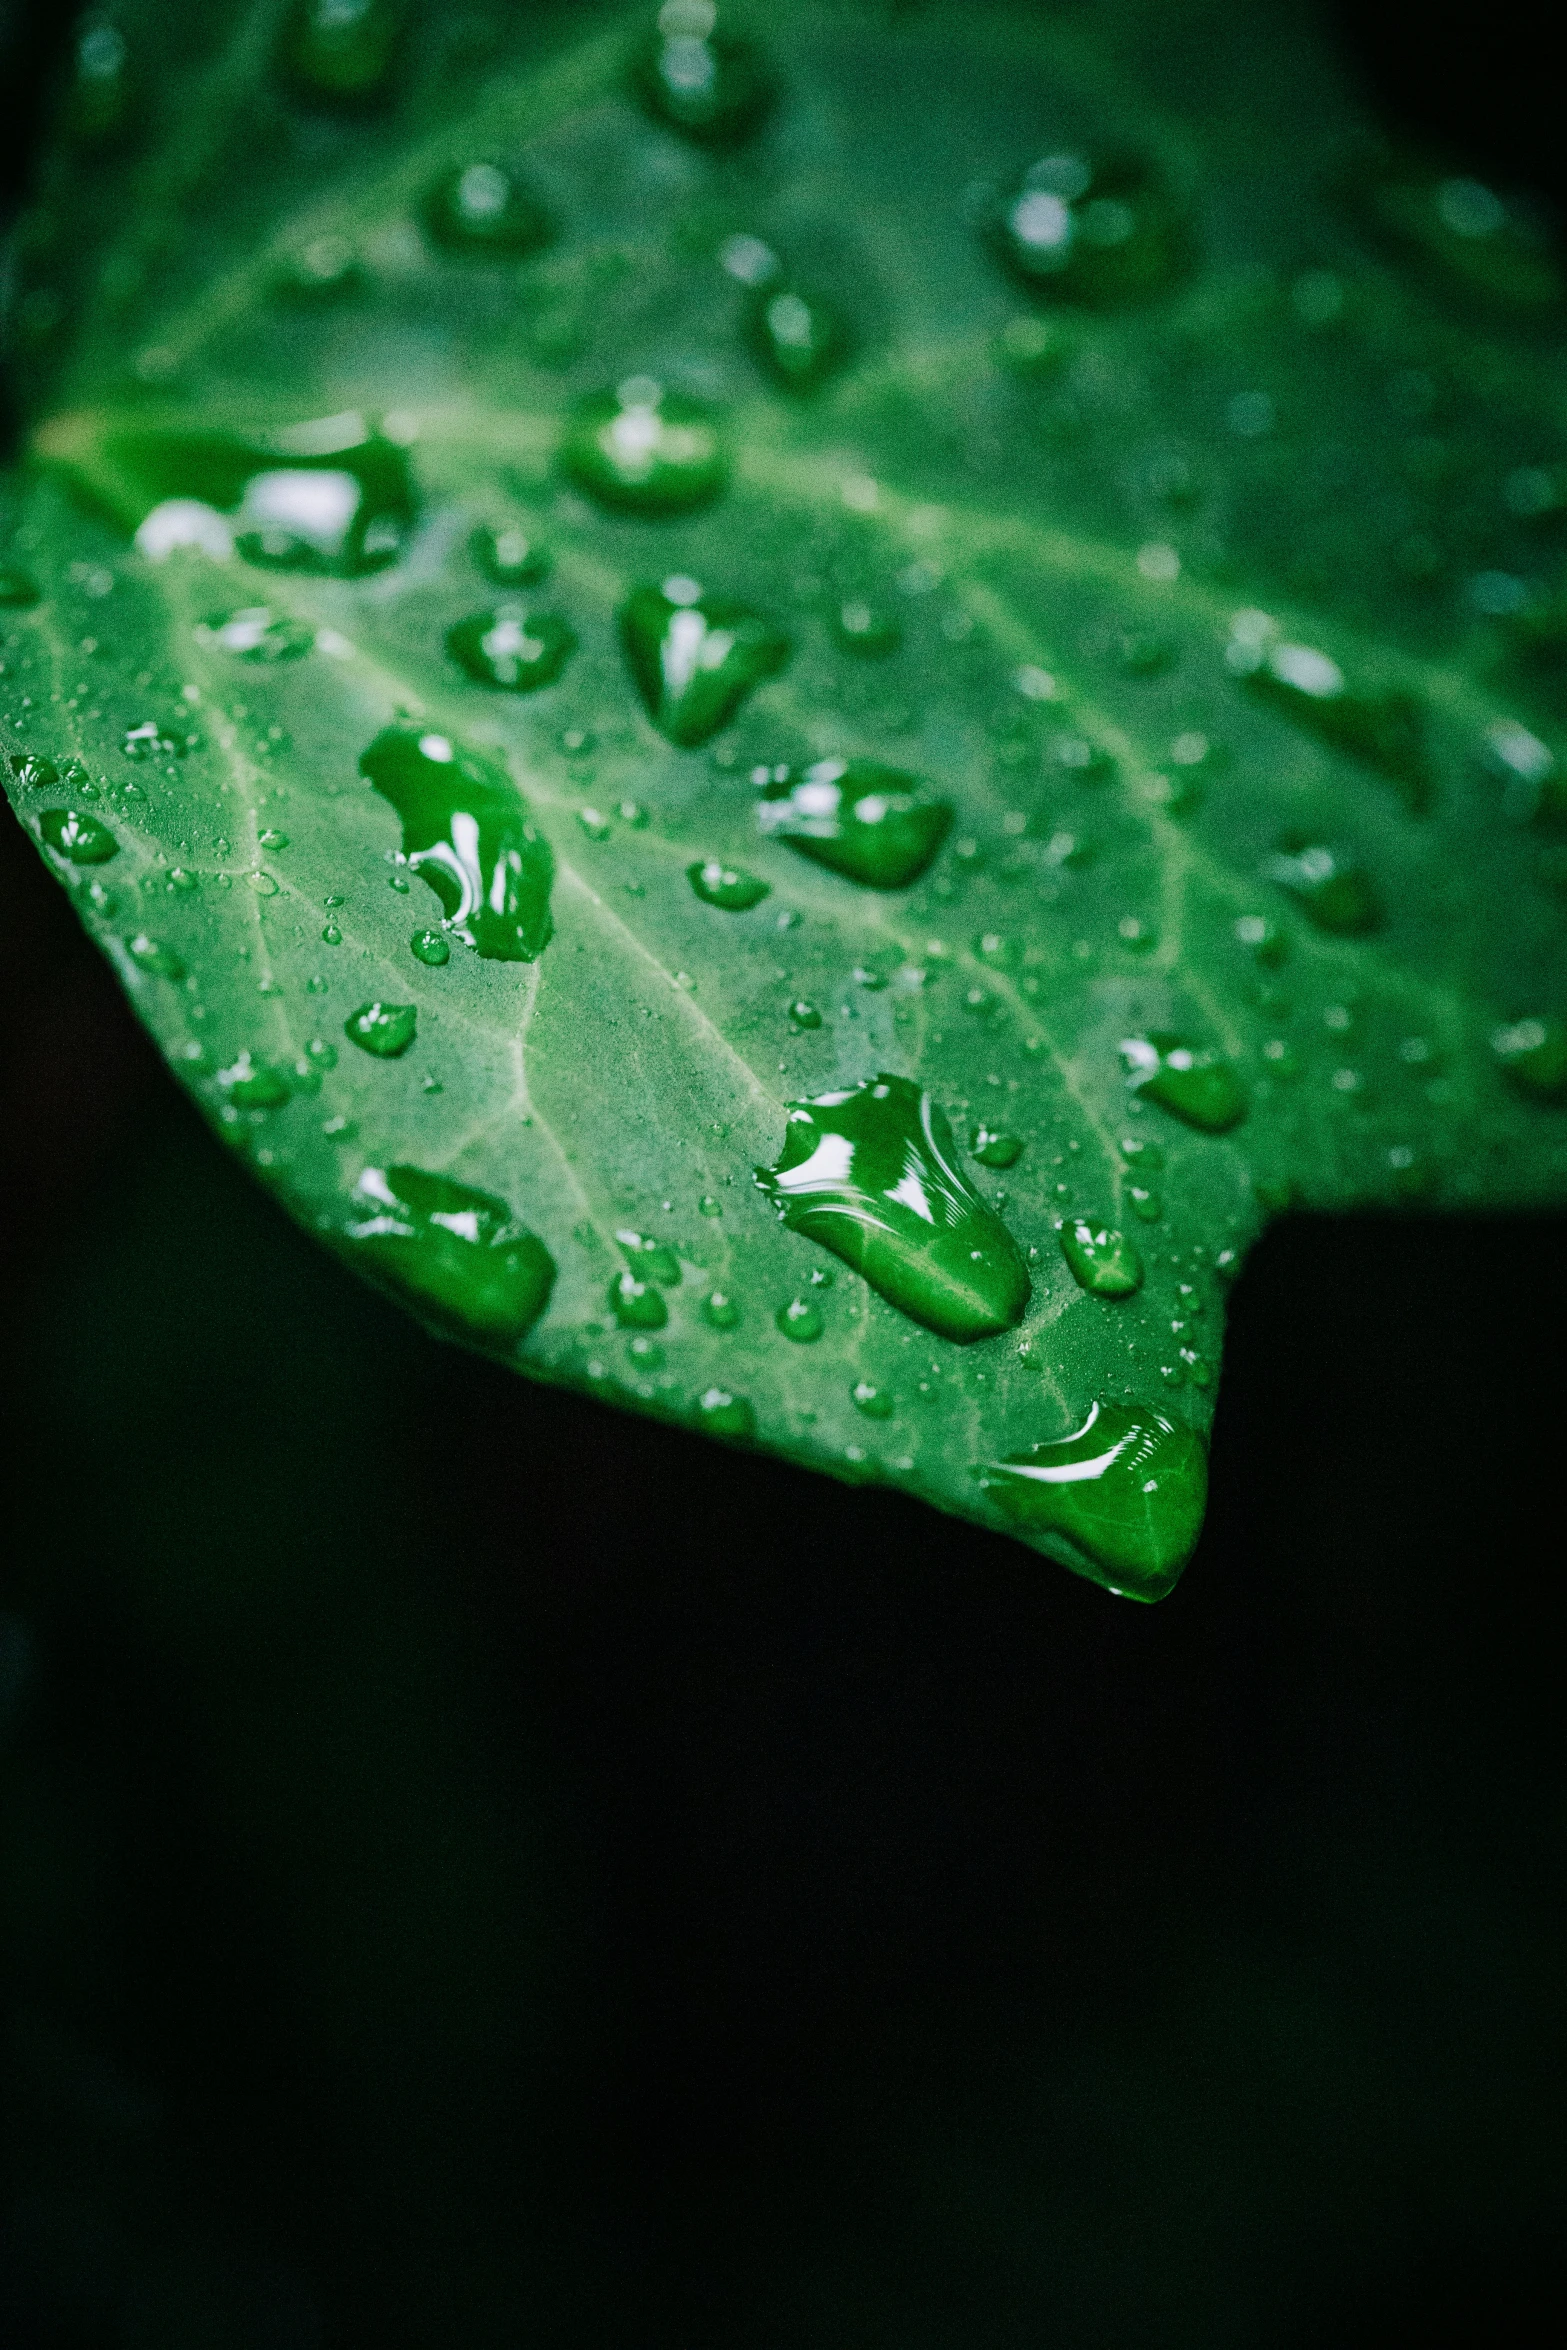 a green leaf has rain drops all over it